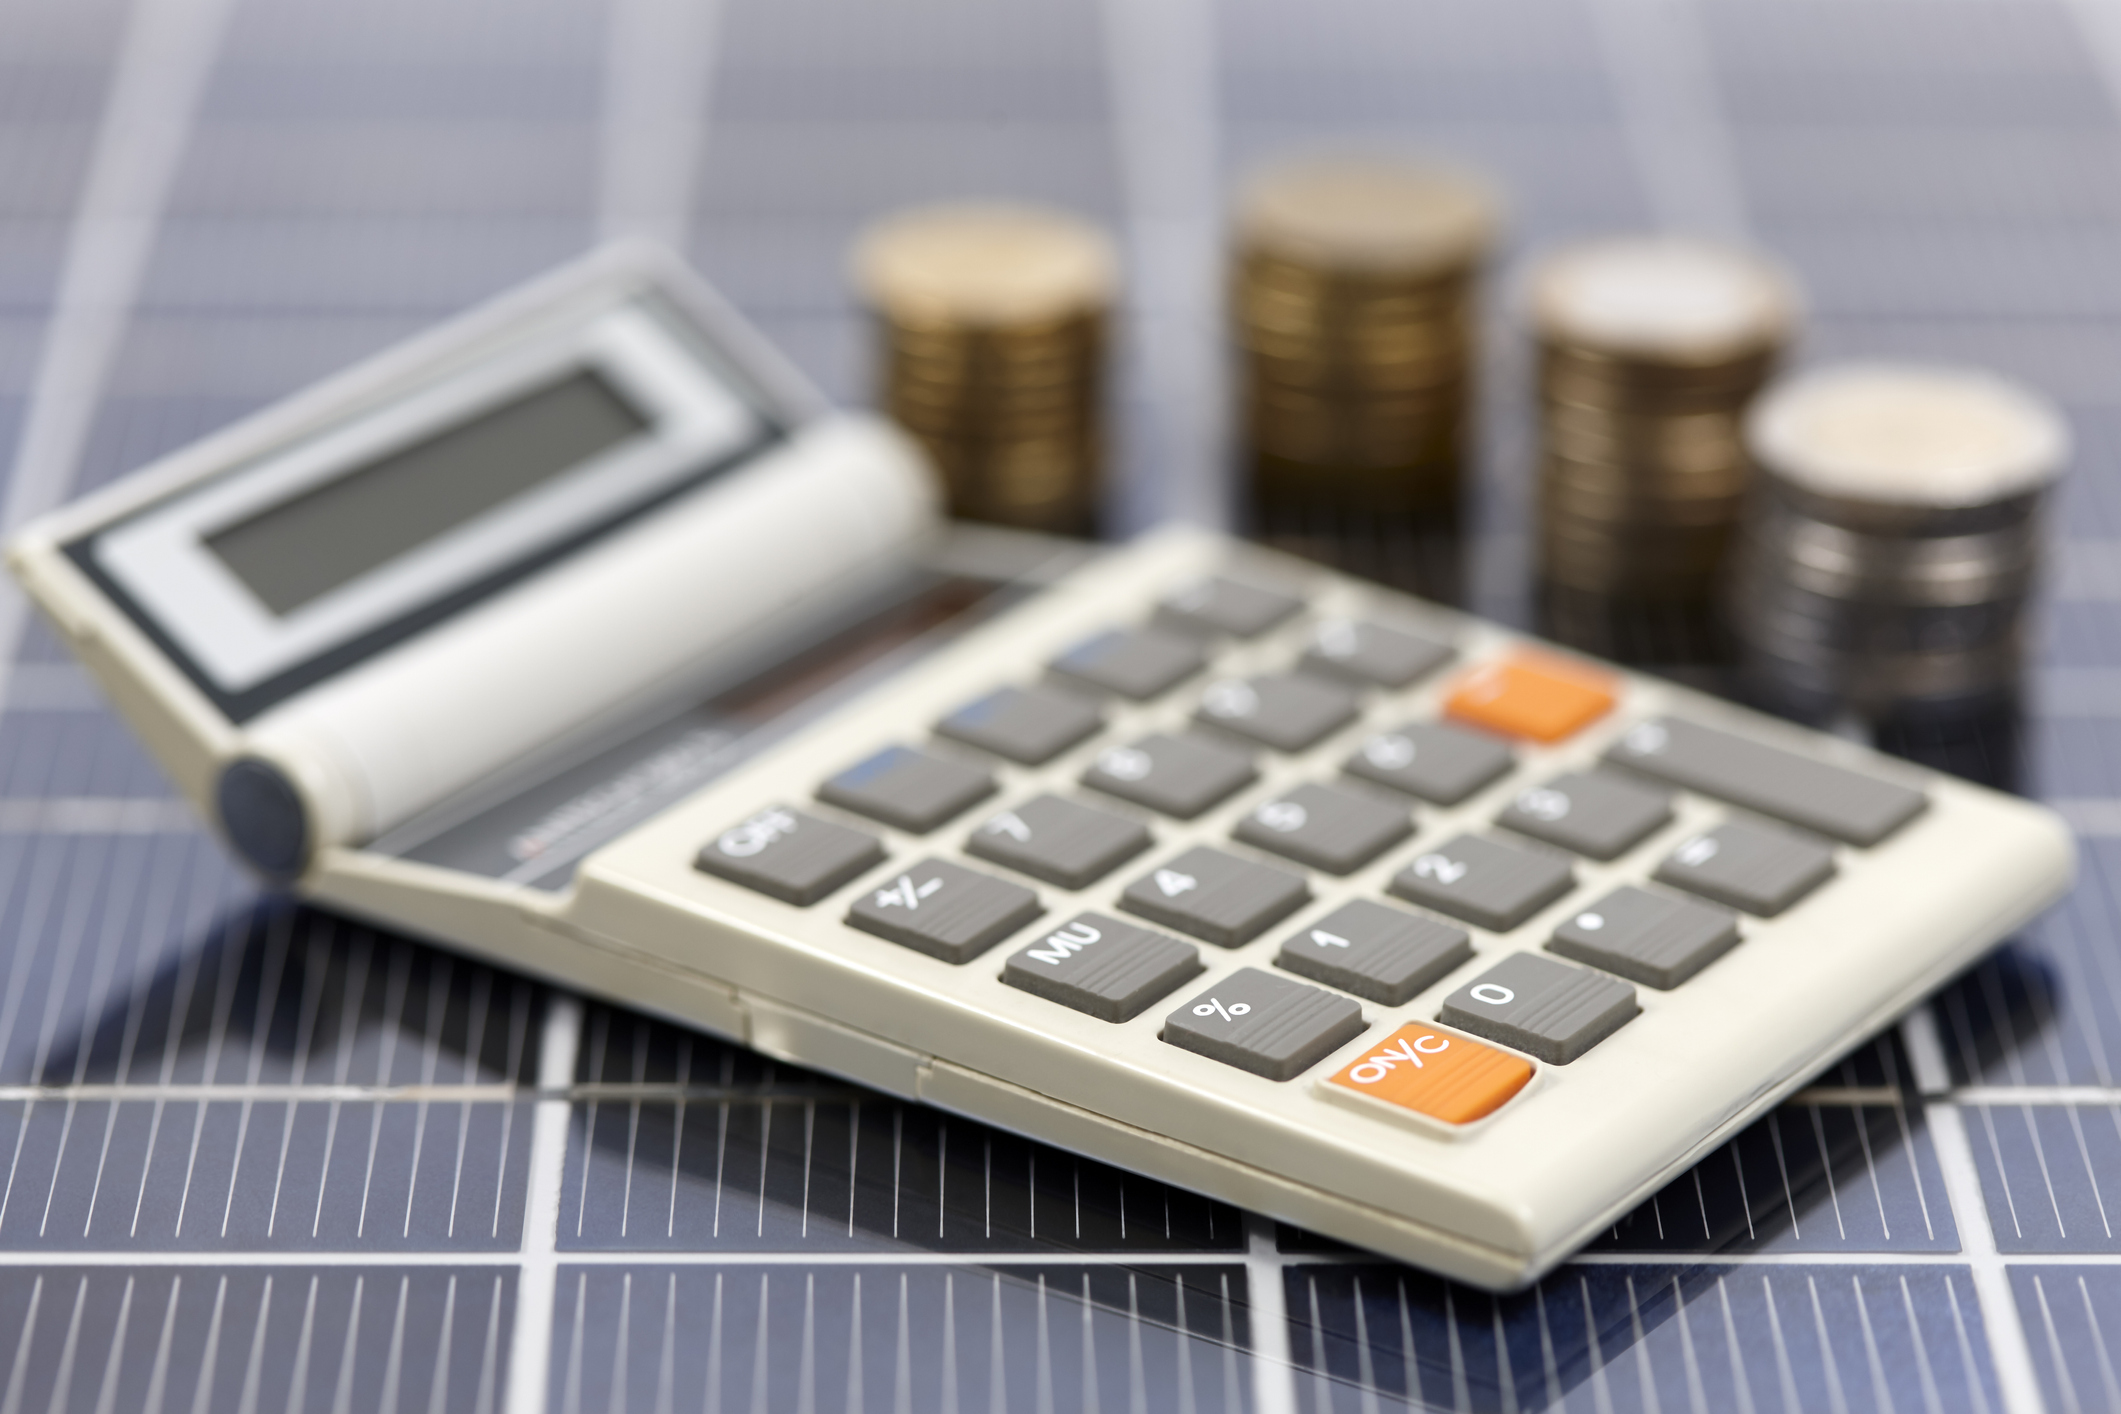 Solar Savings Estimator